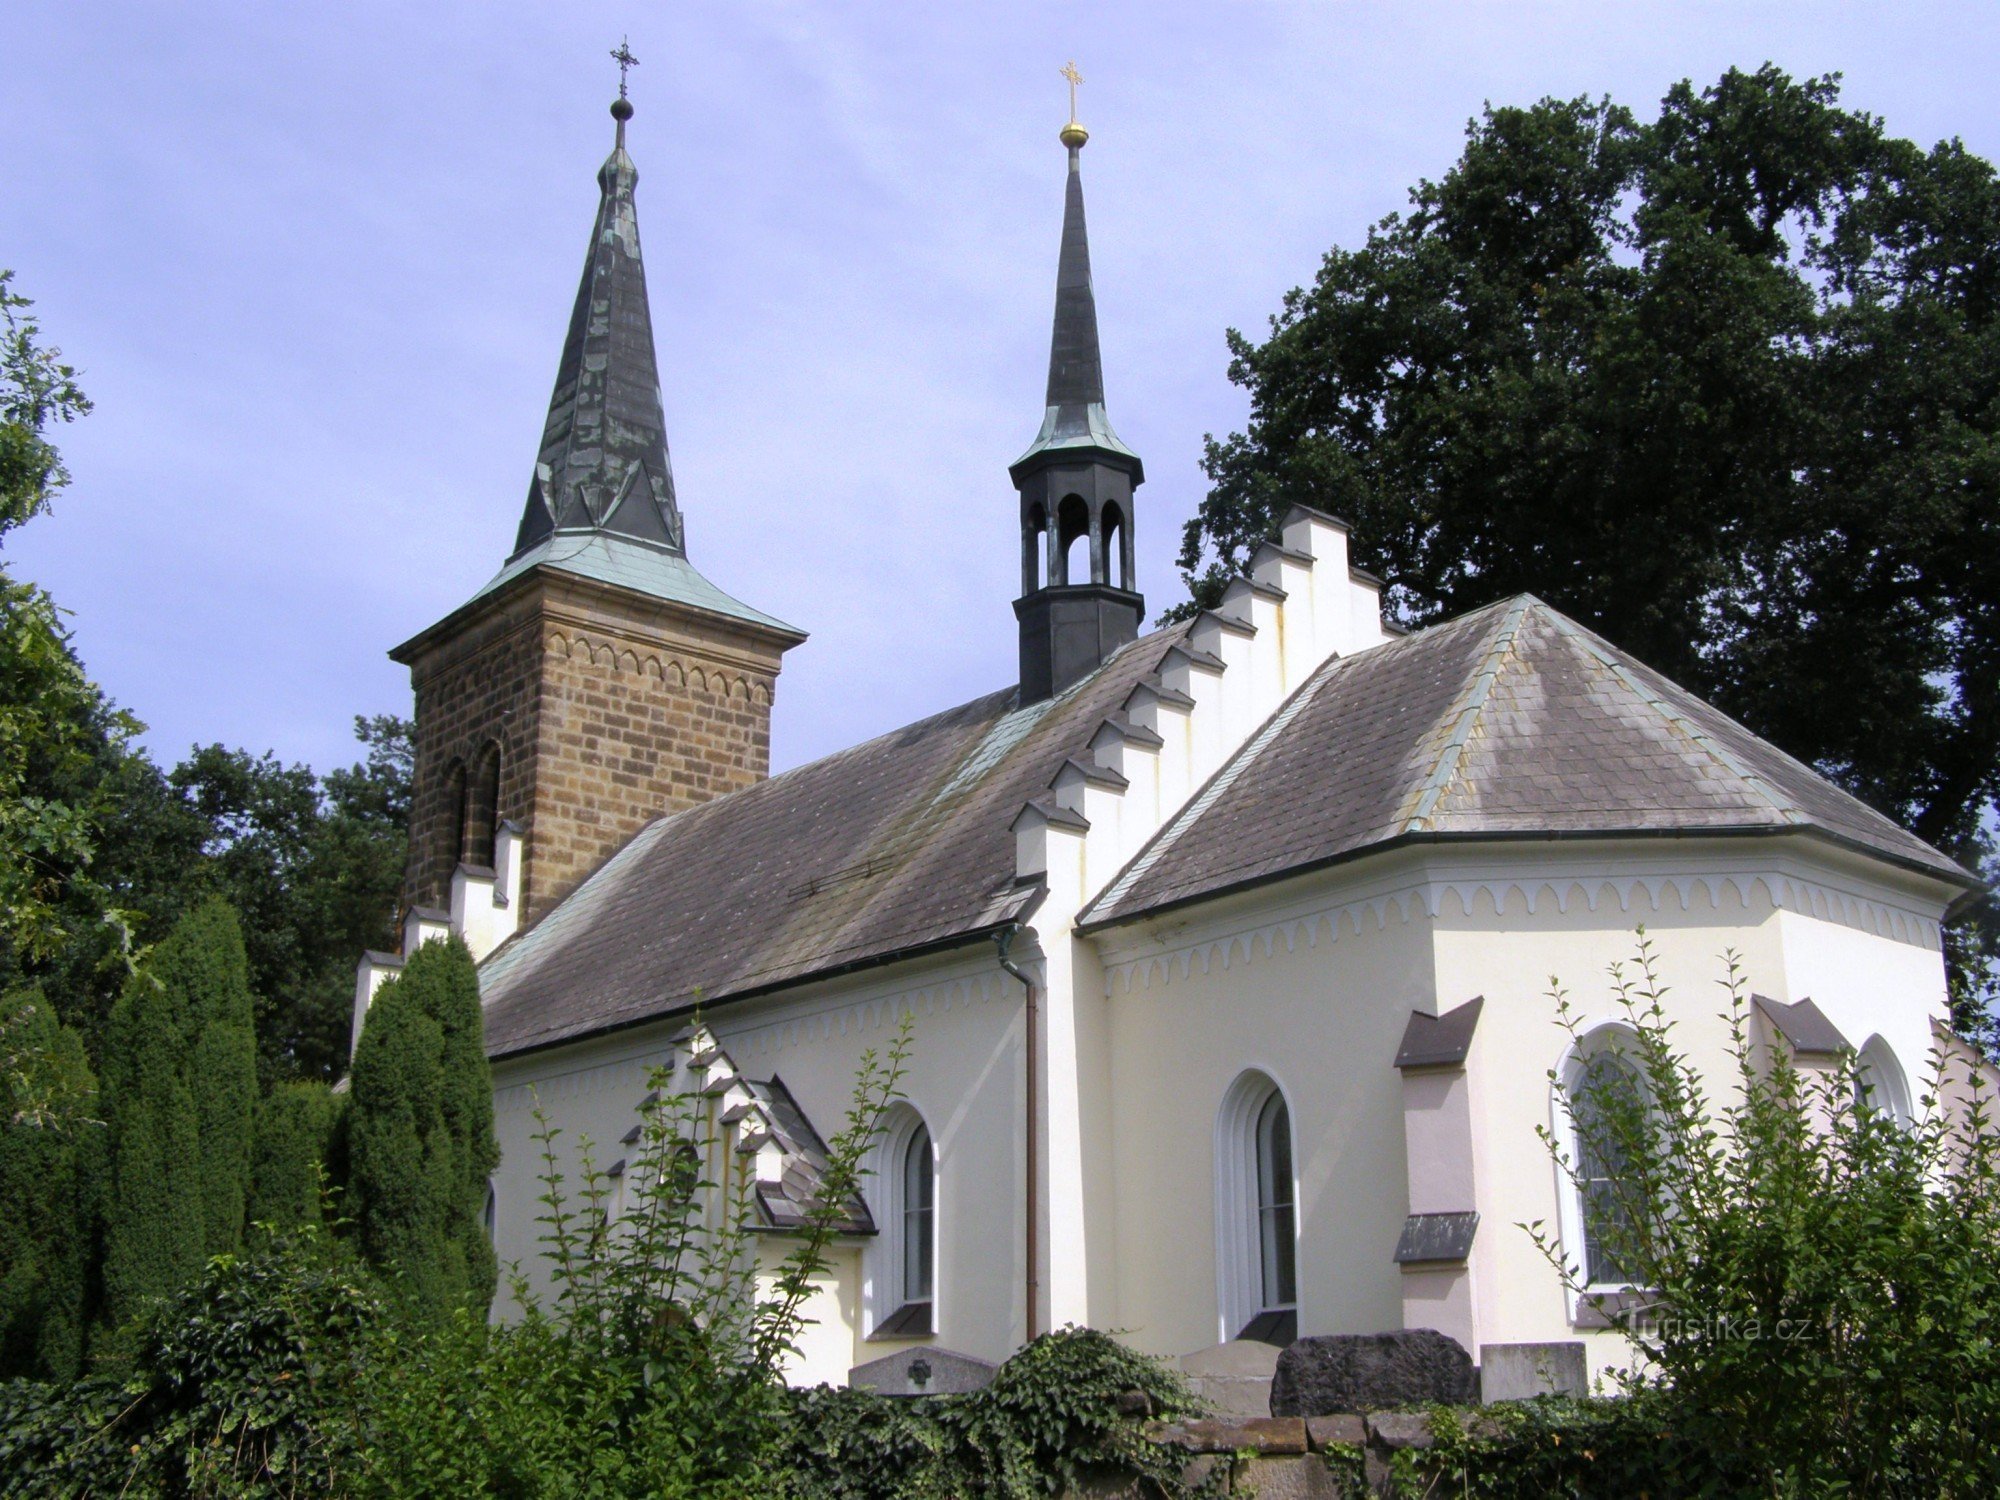 Karlovice - Nhà thờ St. George